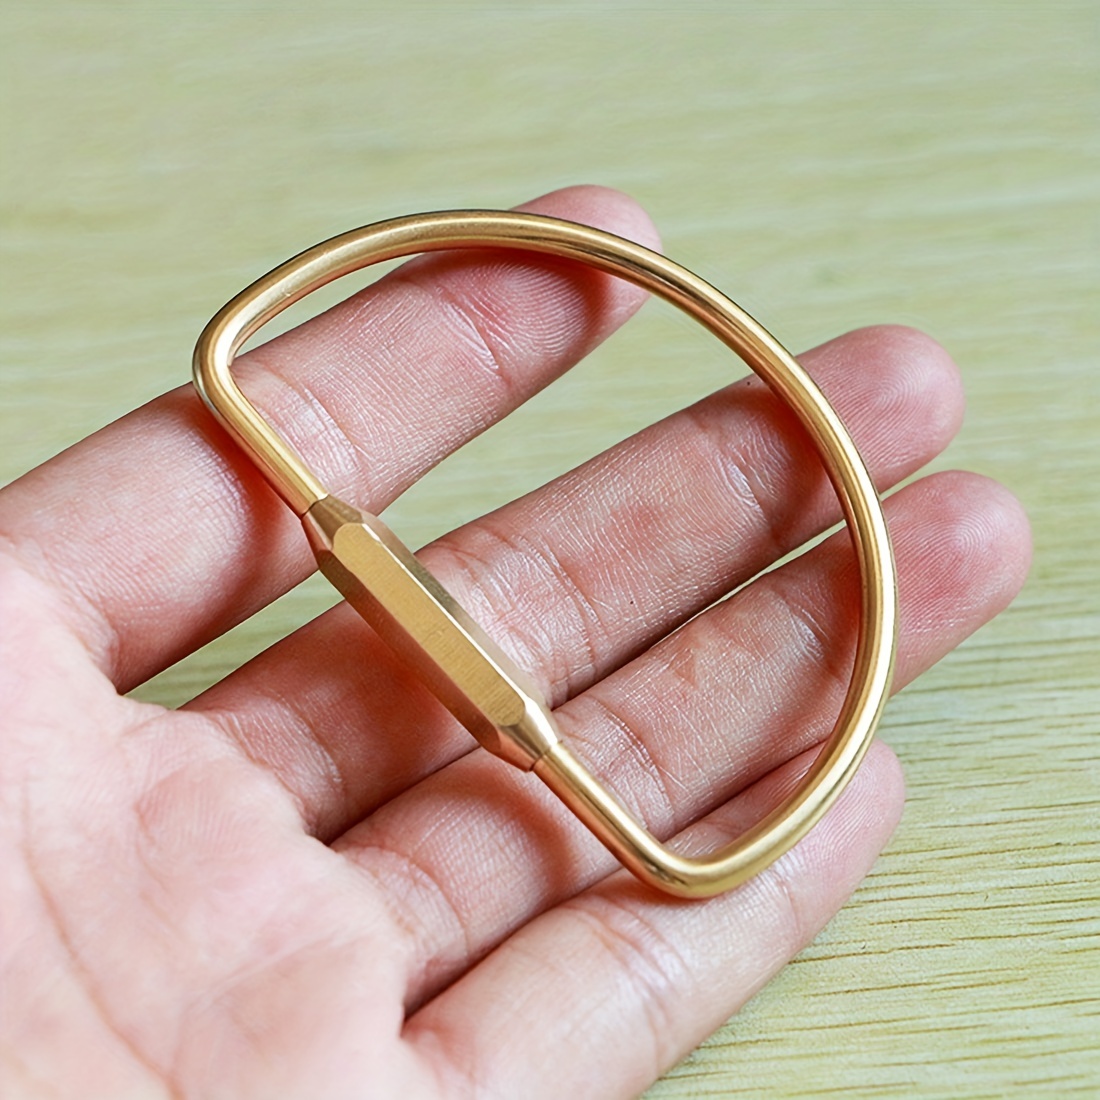 Titanium Alloy Key Ring With Screw Lock D ring Metal - Temu